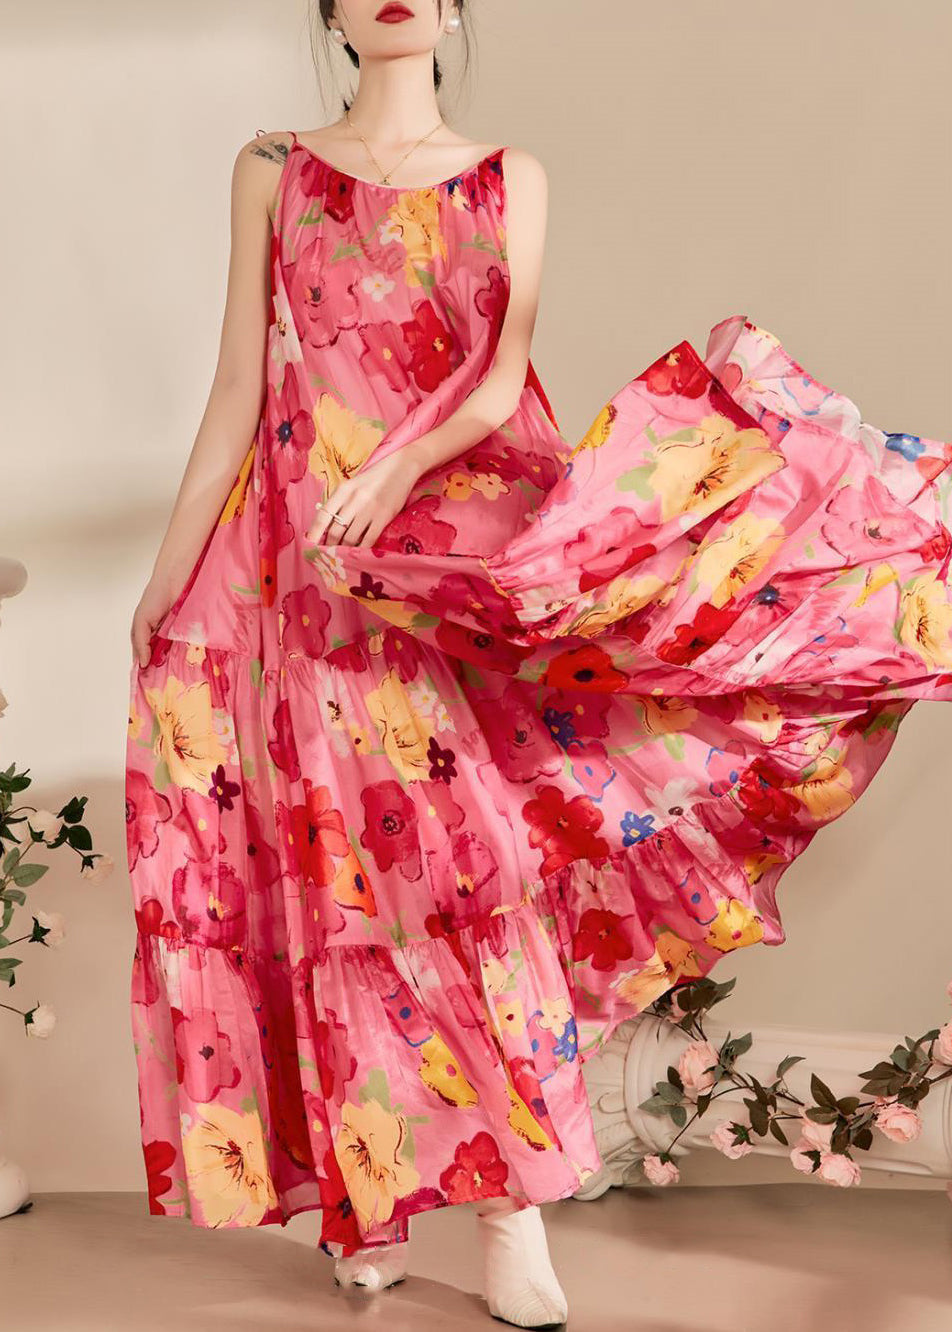 Italian Pink Print Backless Cotton Spaghetti Strap Dress Sleeveless